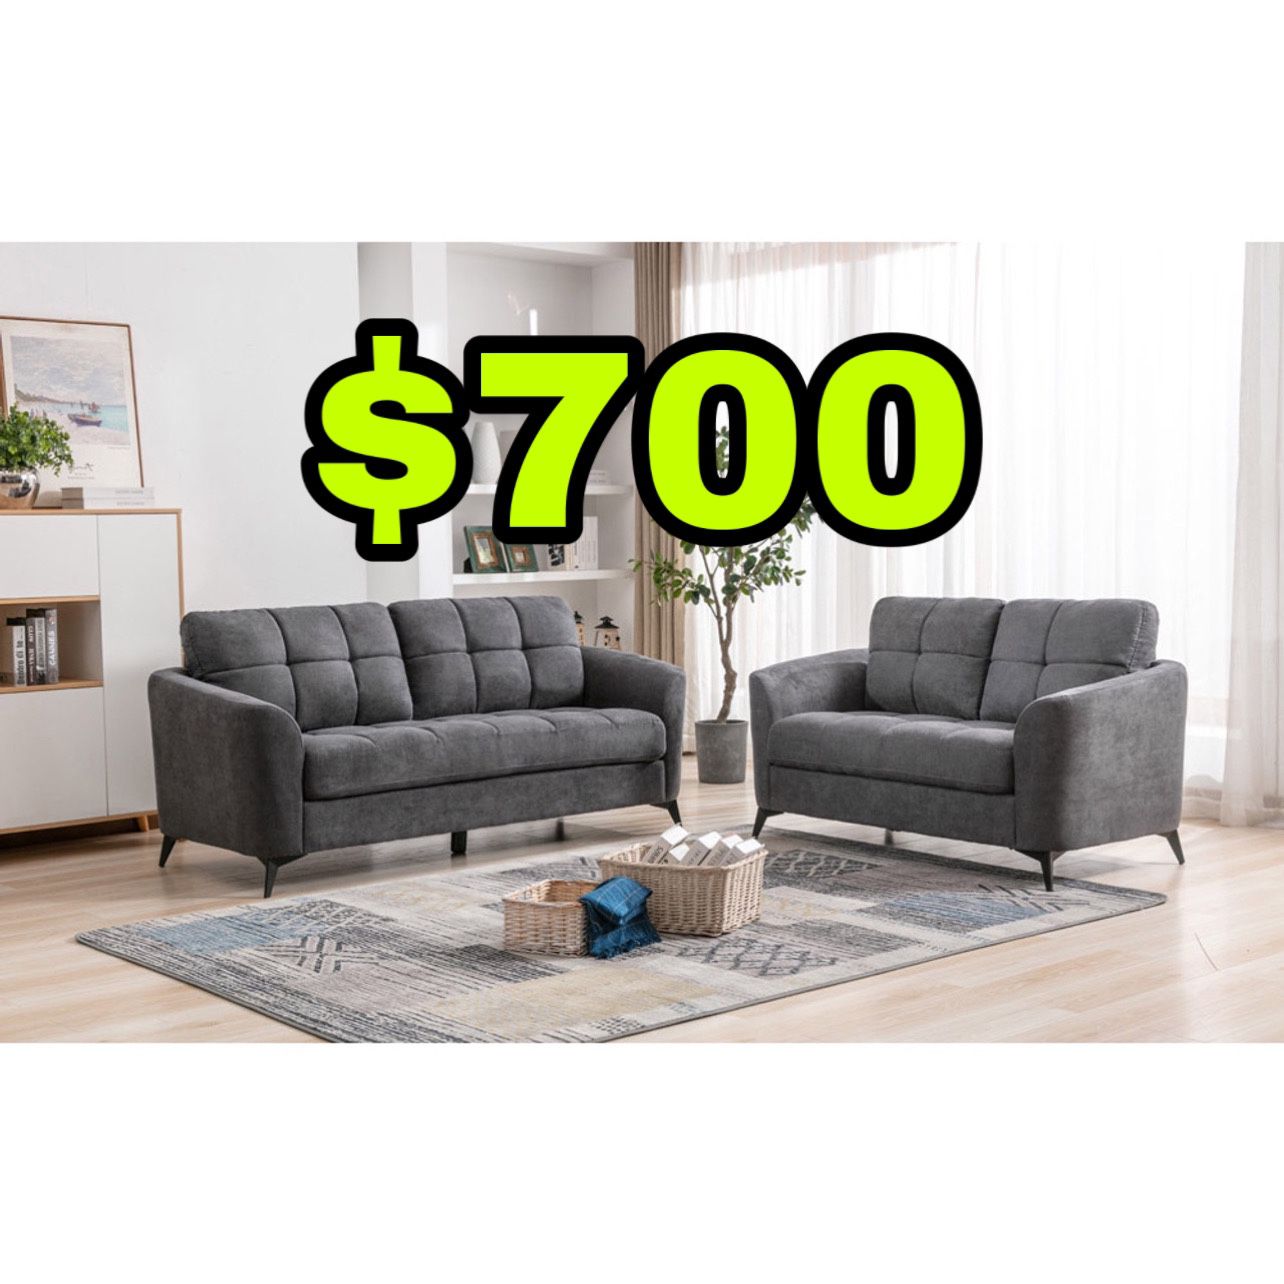 Beautiful New 2PC Tufted Sofa Set(1 Sofa & 1 Loveseat) in Gray Velvet Only $700!!!